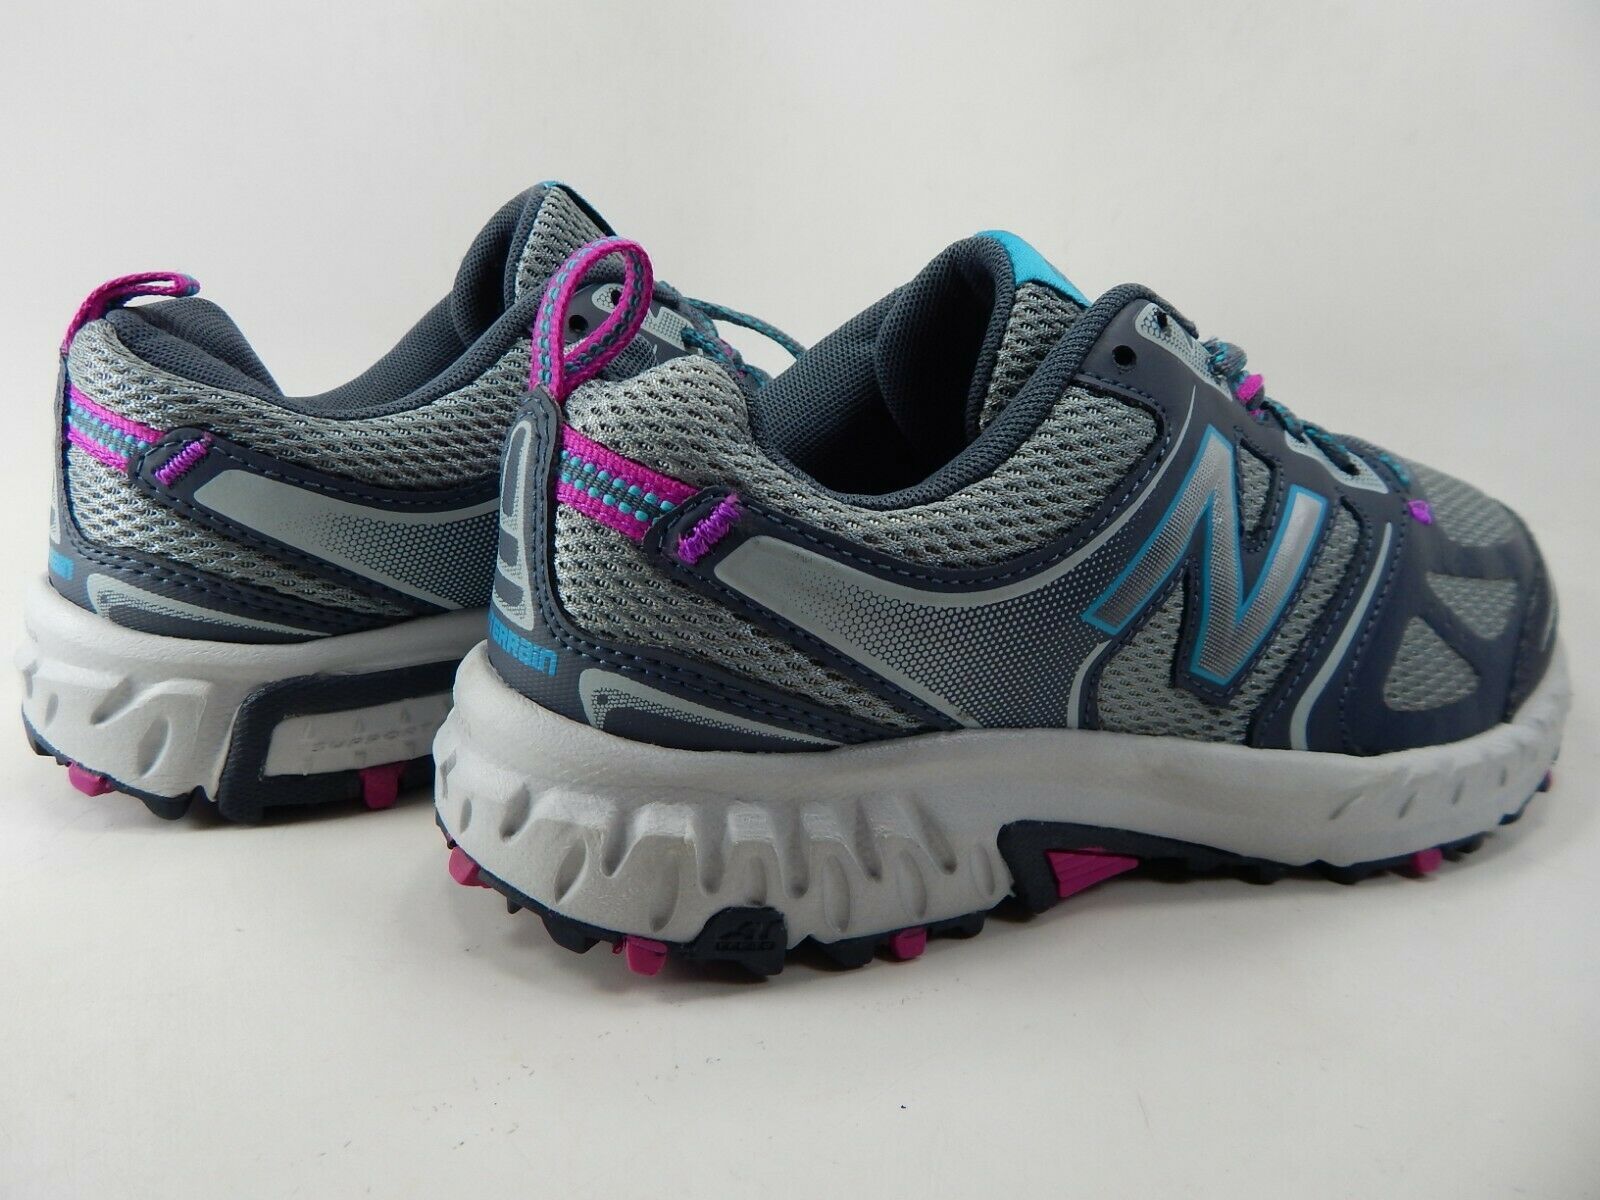 New Balance 412 v3 Size 8 M (B) EU 39 Women's Trail Running Shoes Gray ...